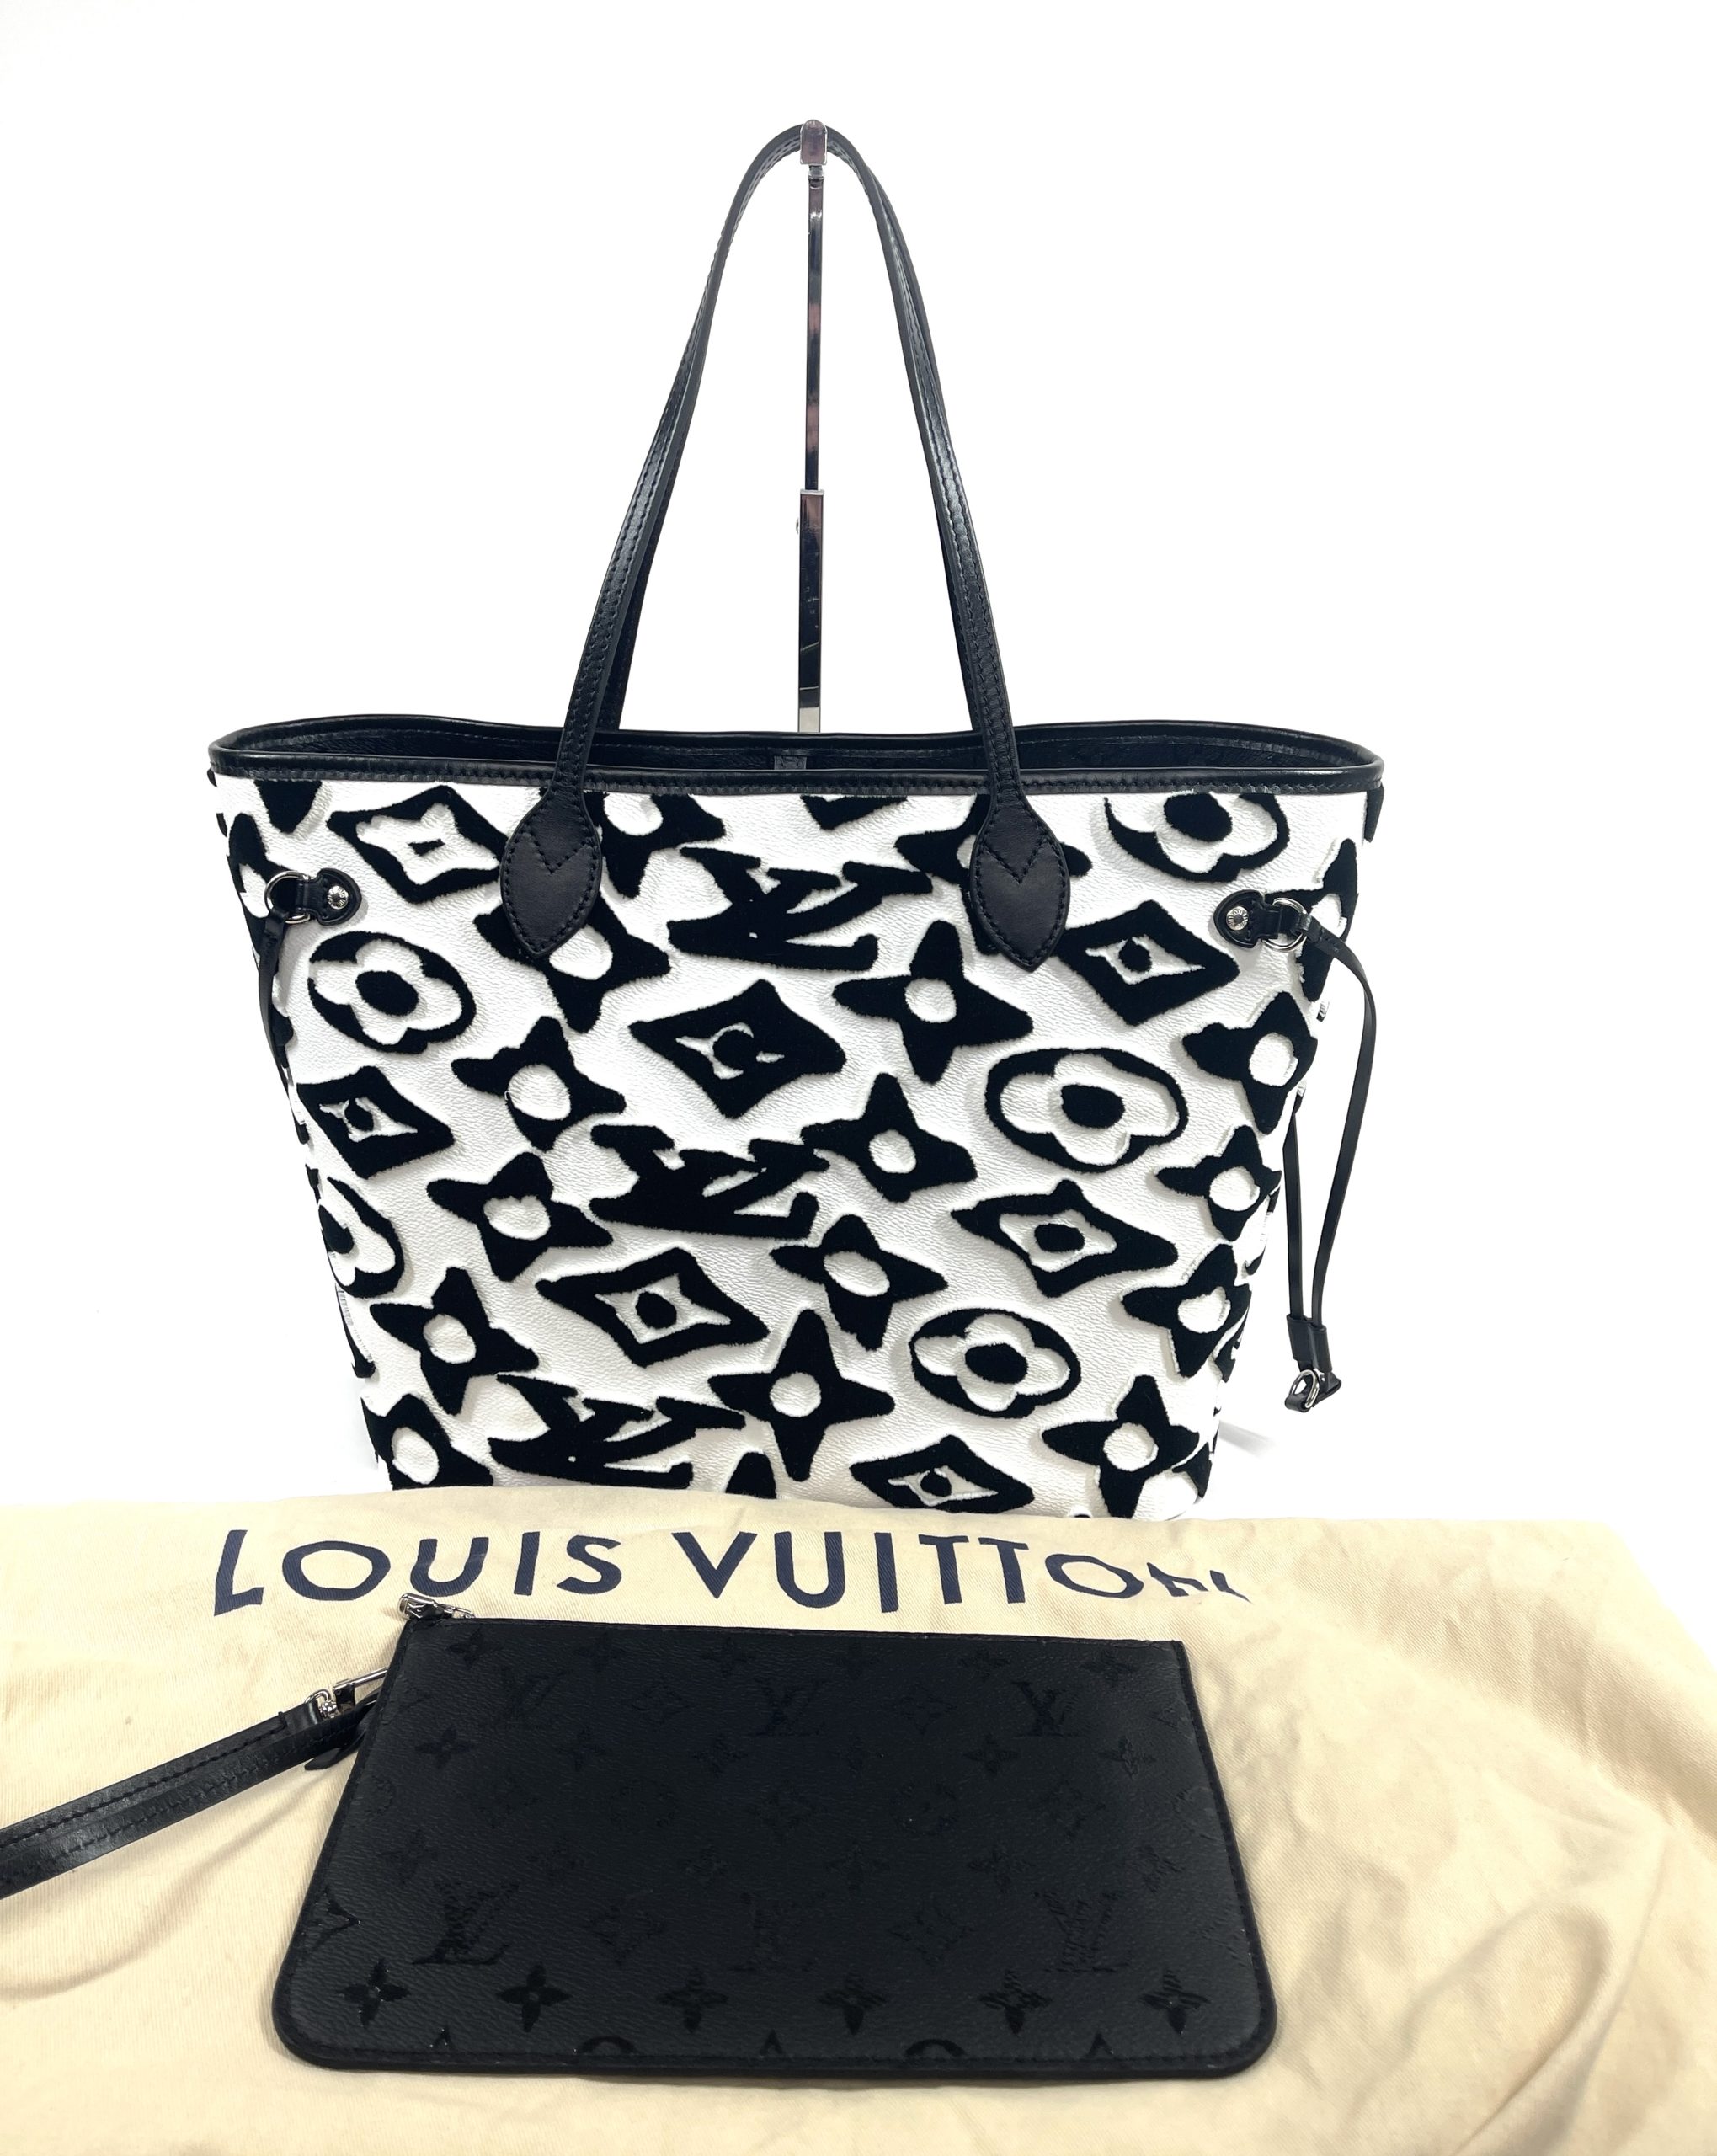 Louis Vuitton Neverfull MM Urs Fischer White Black Coated Canvas